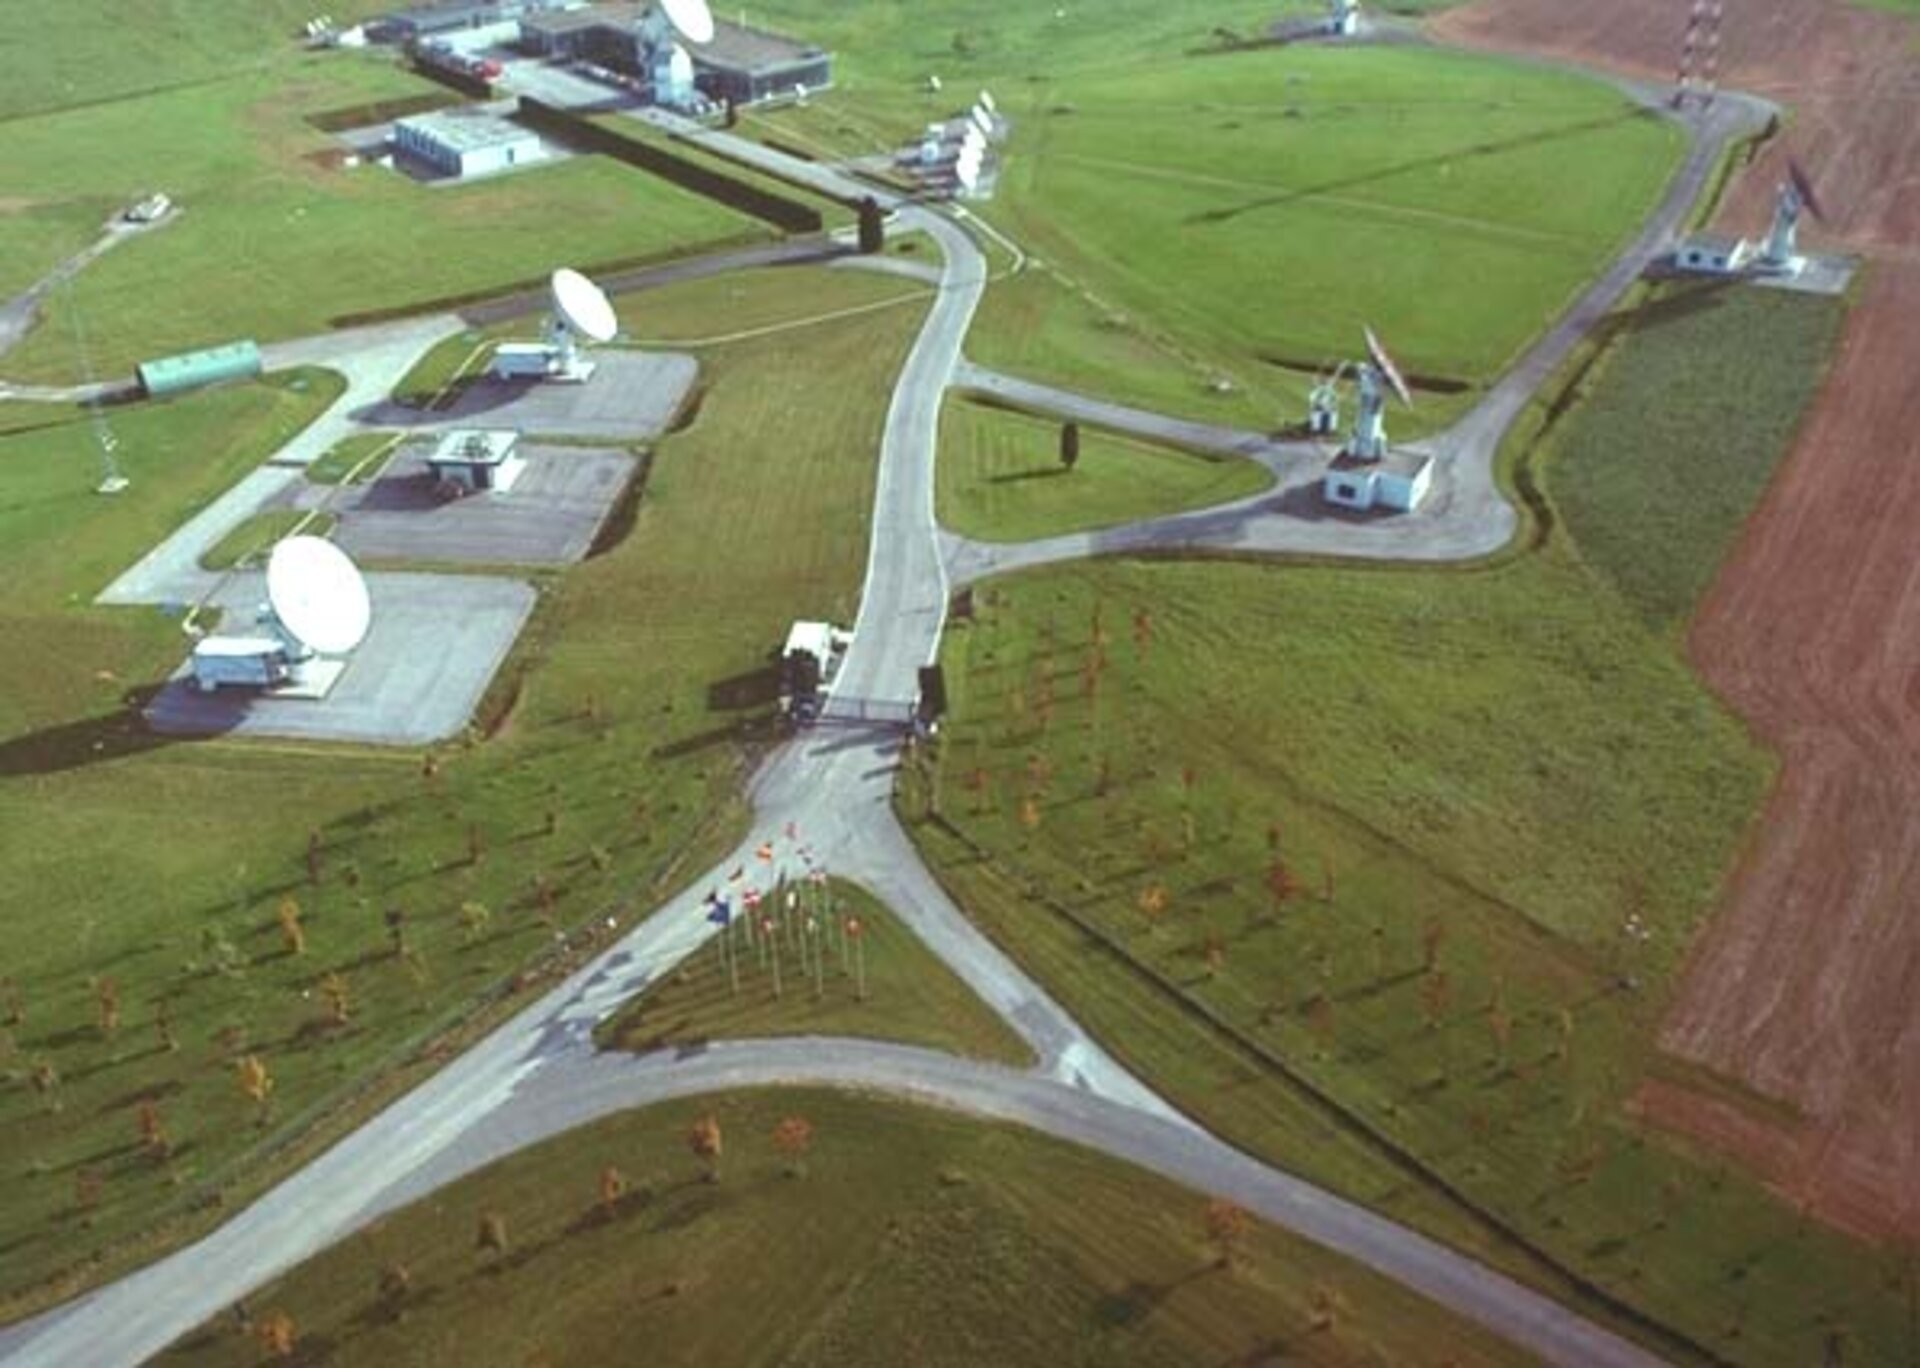 ESA ground station at Redu